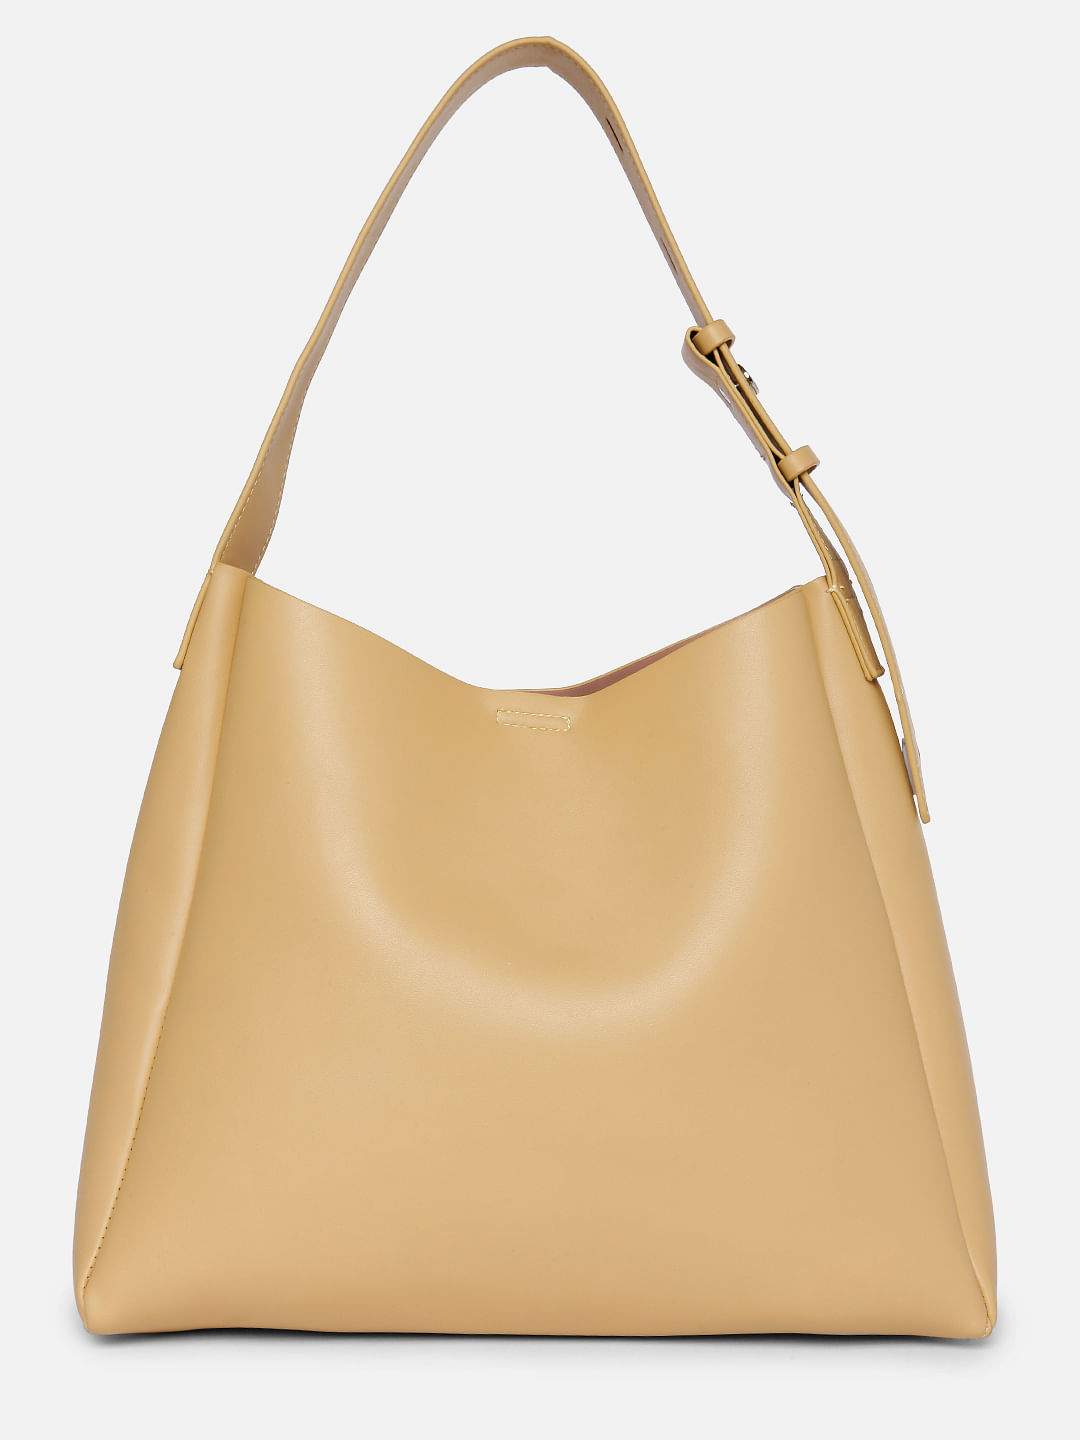 Yellow handbags 2023 - The trend color in the fashion world | BONAVENTURA